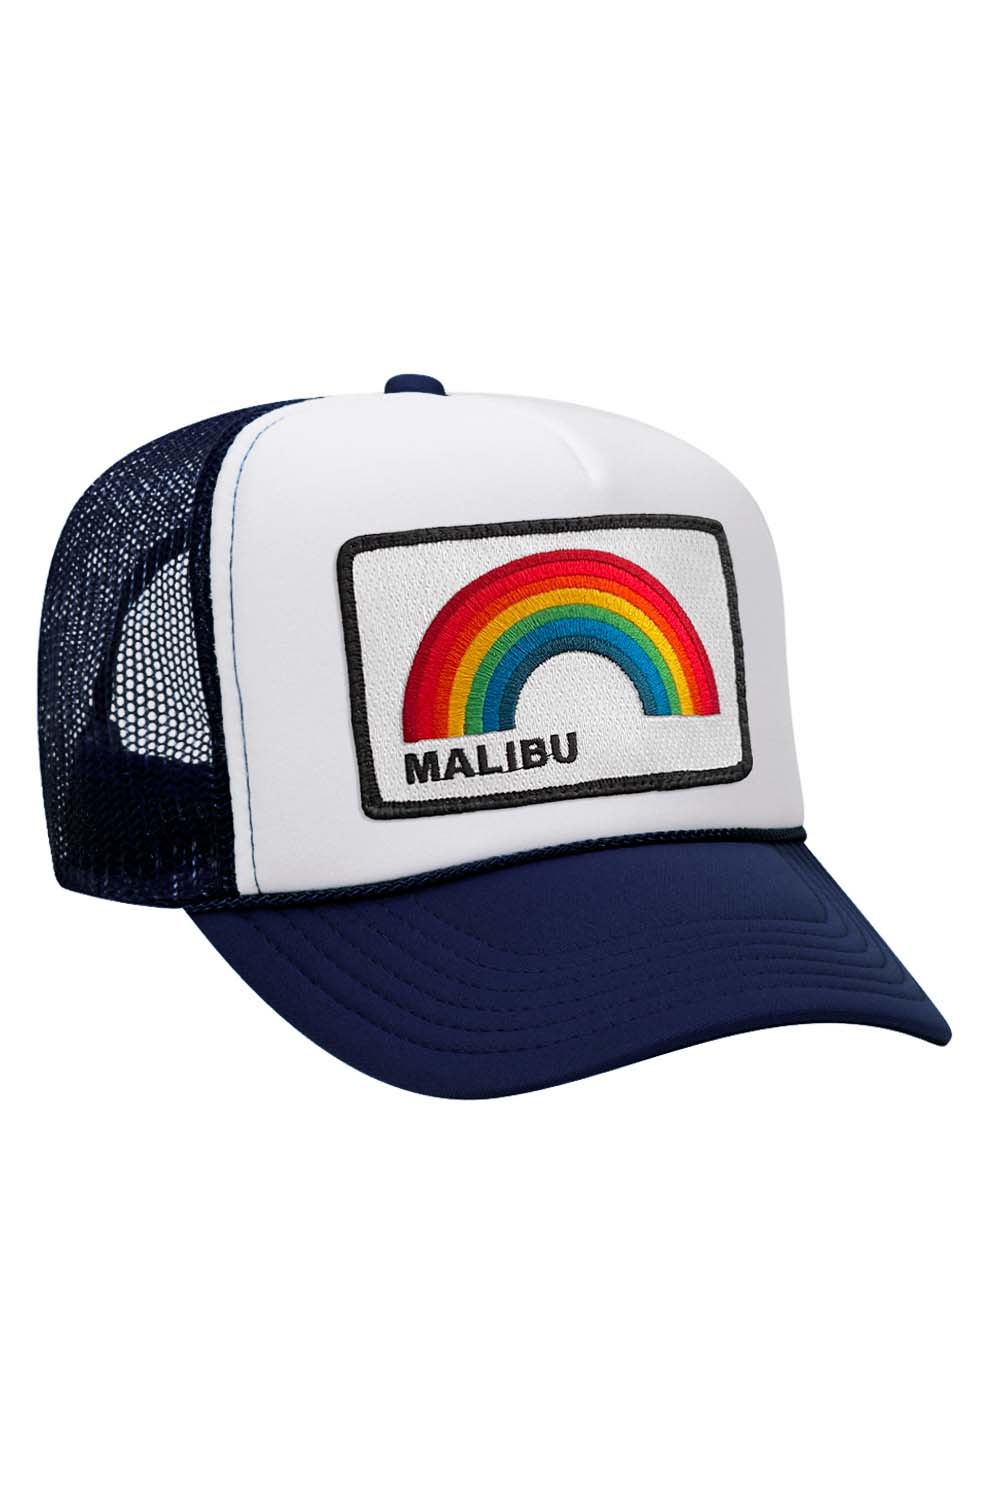 MALIBU RAINBOW TRUCKER HAT HATS Aviator Nation OS NAVY // WHITE // NAVY 